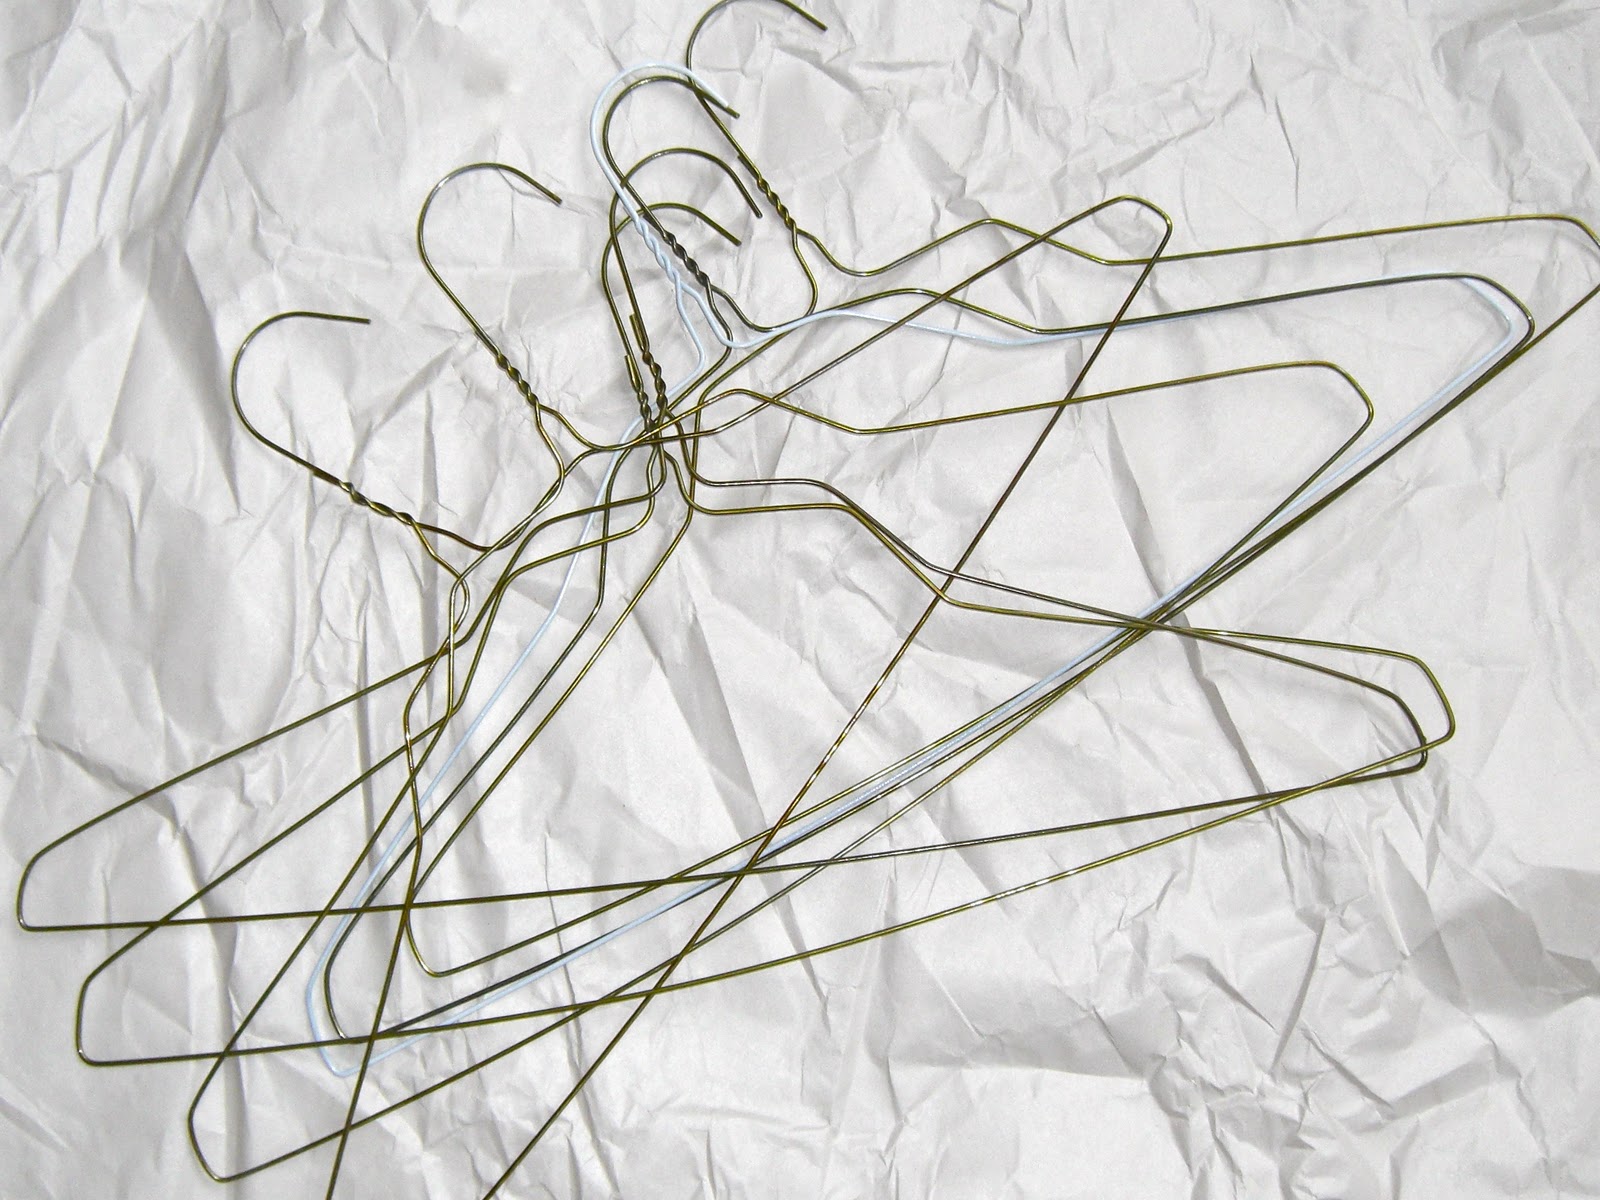 https://nwedible.com/wp-content/uploads/2011/02/Turn-Your-Old-Wire-Hangers-Into-Garden-Staples65.jpg